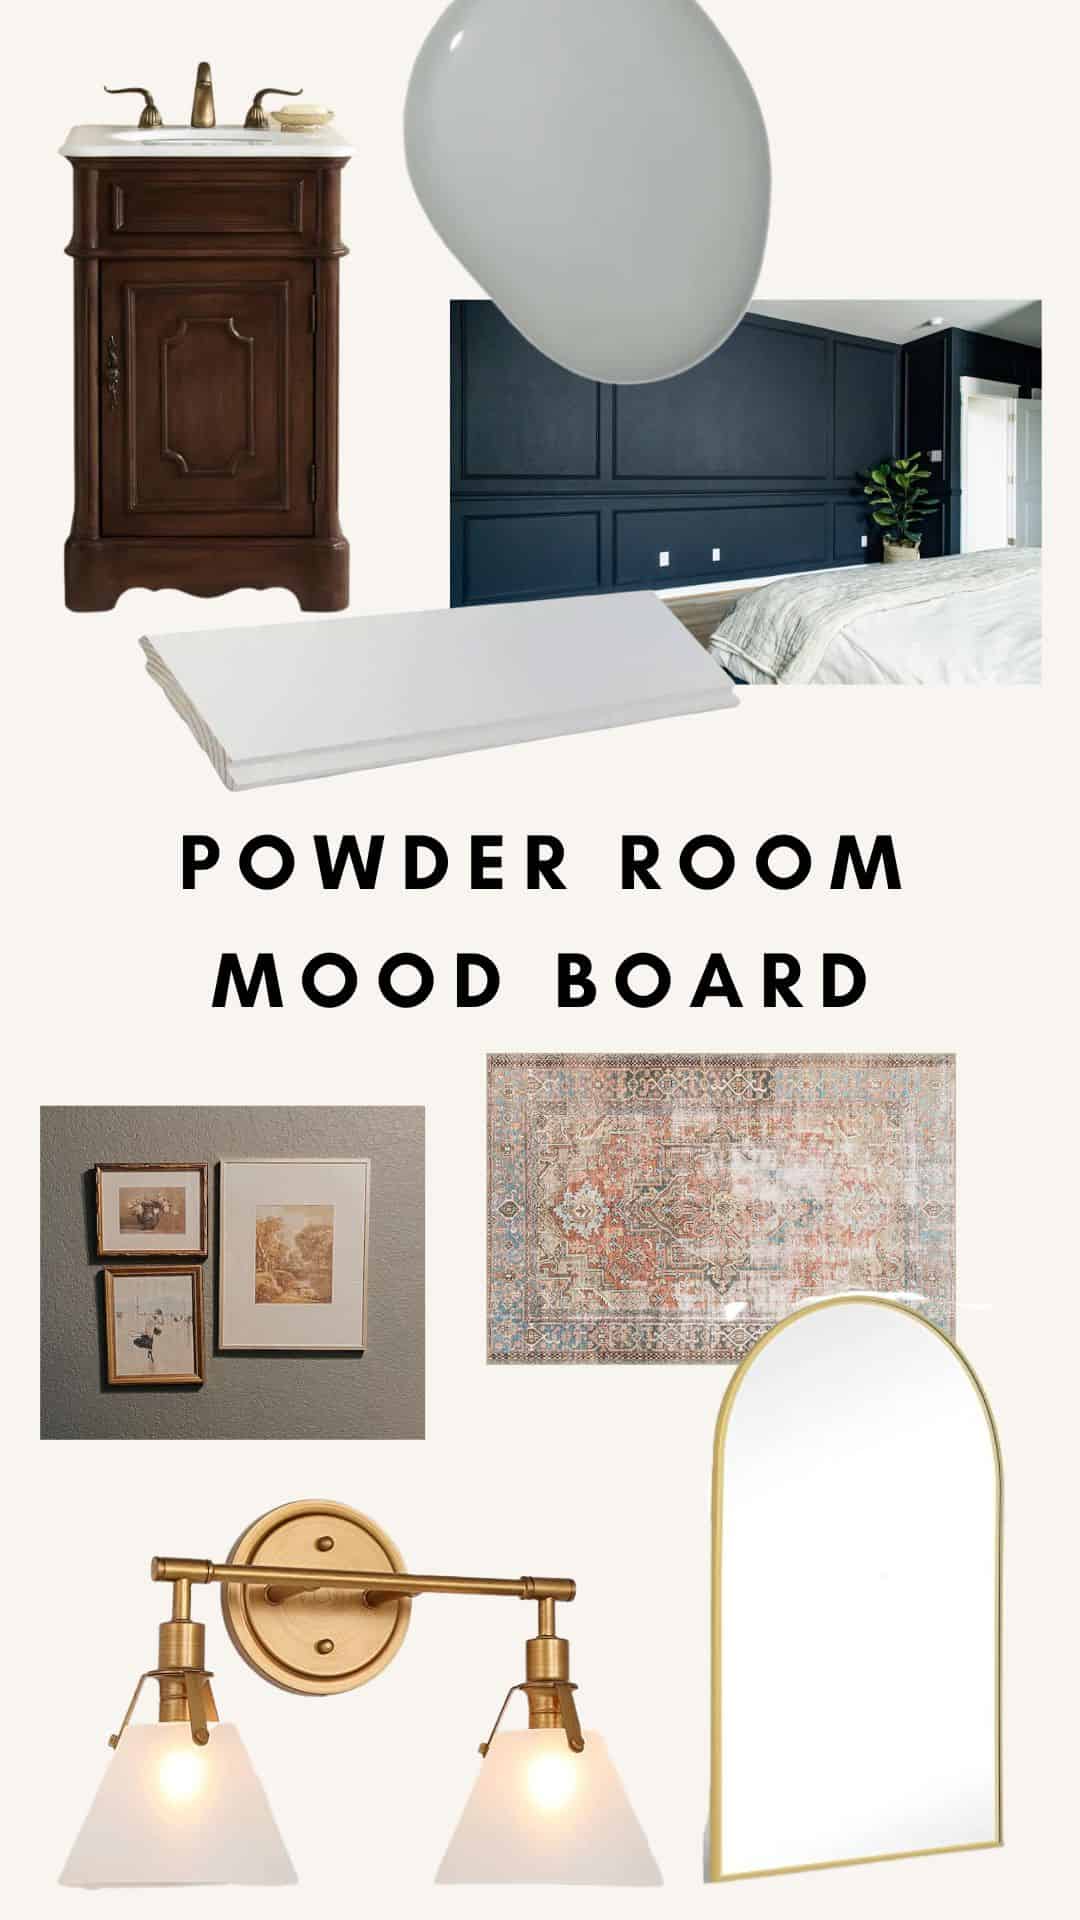 The Powder Room Mood Board